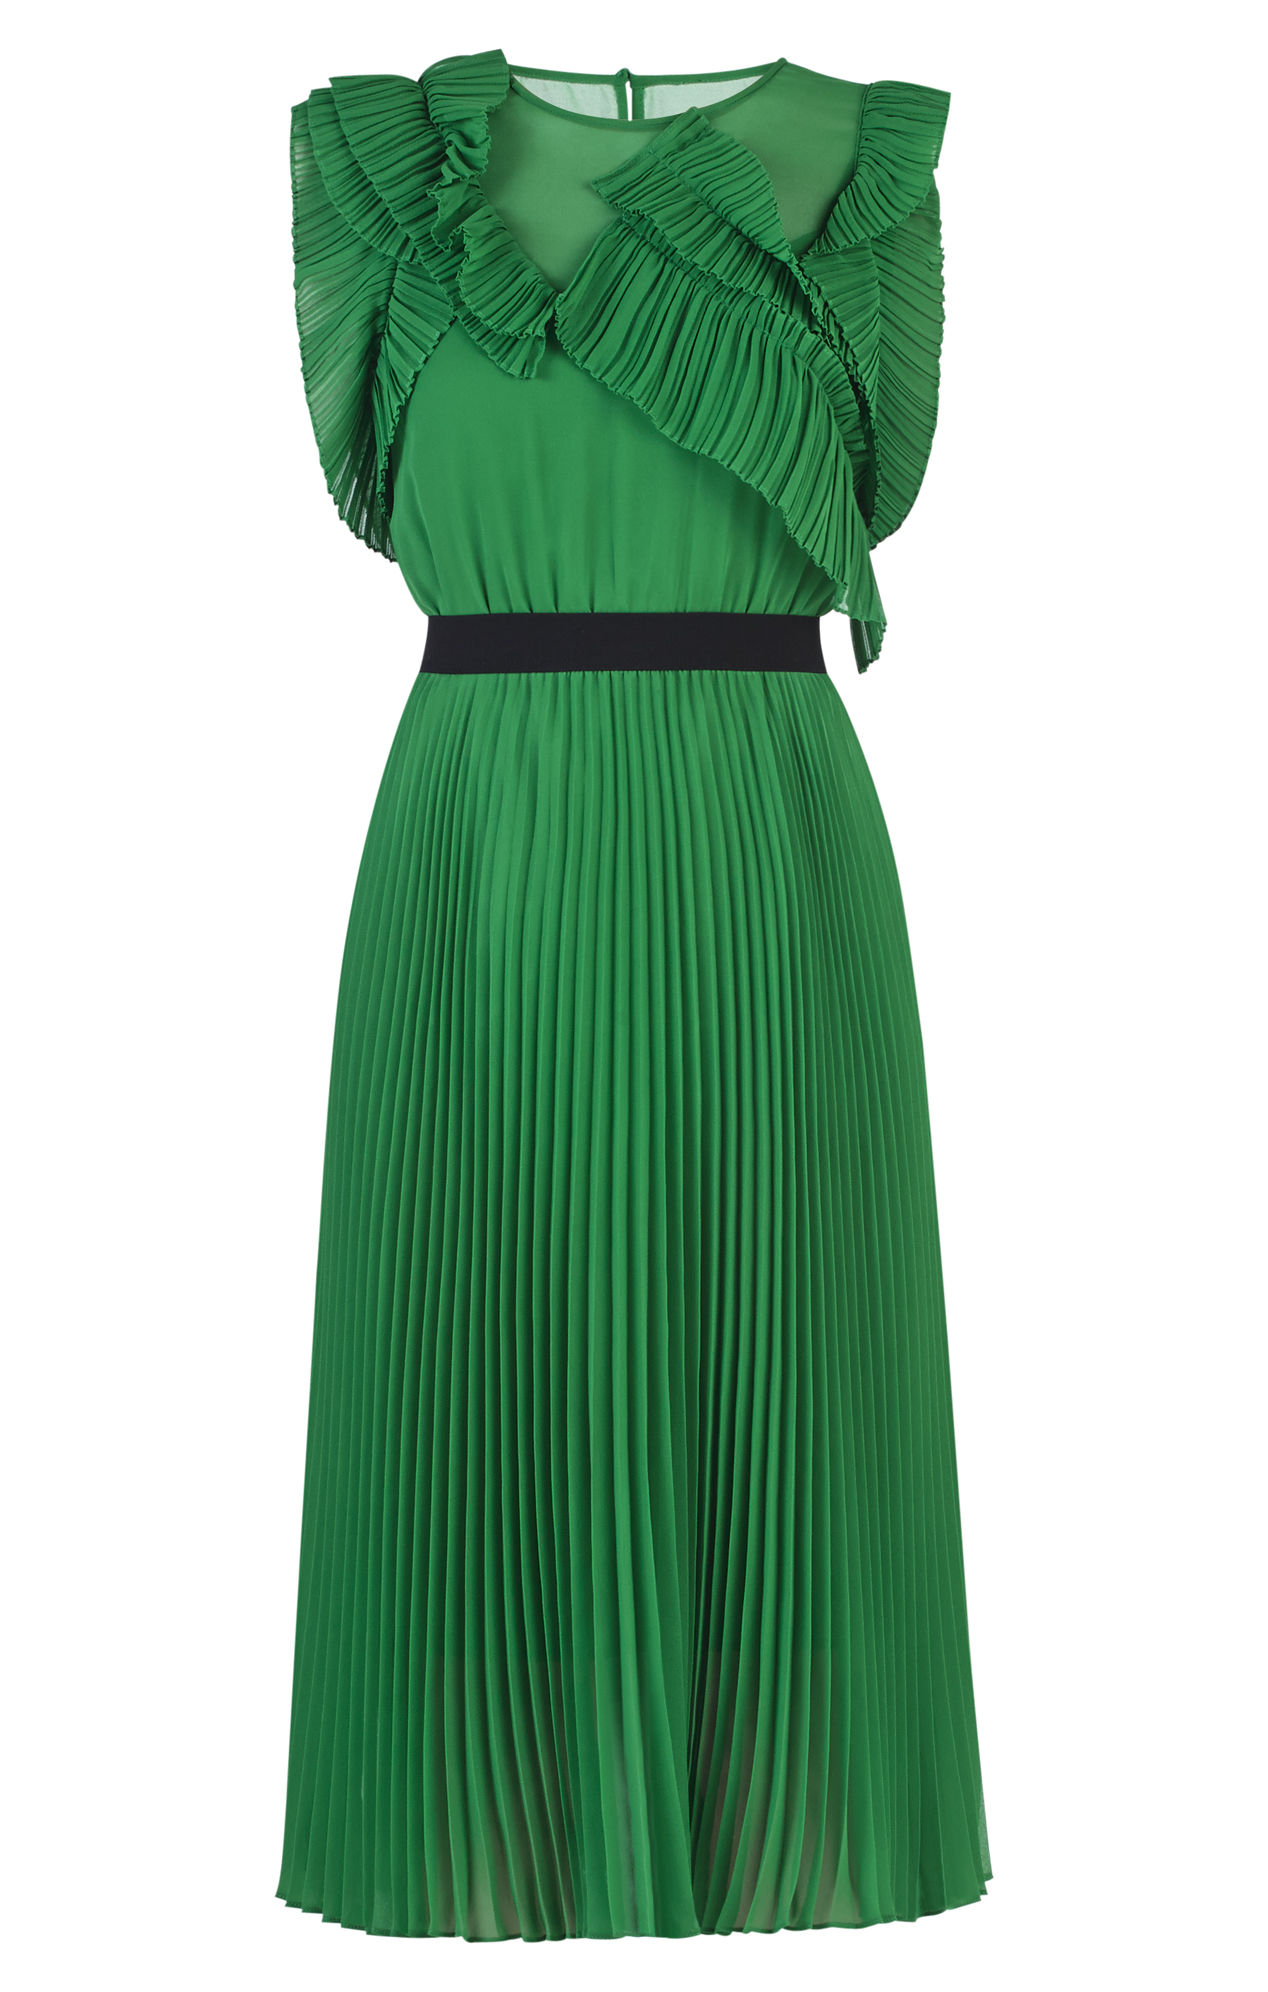 Lyst - Bcbgmaxazria Lanette Sleeveless Pleated Ruffle Dress in Green